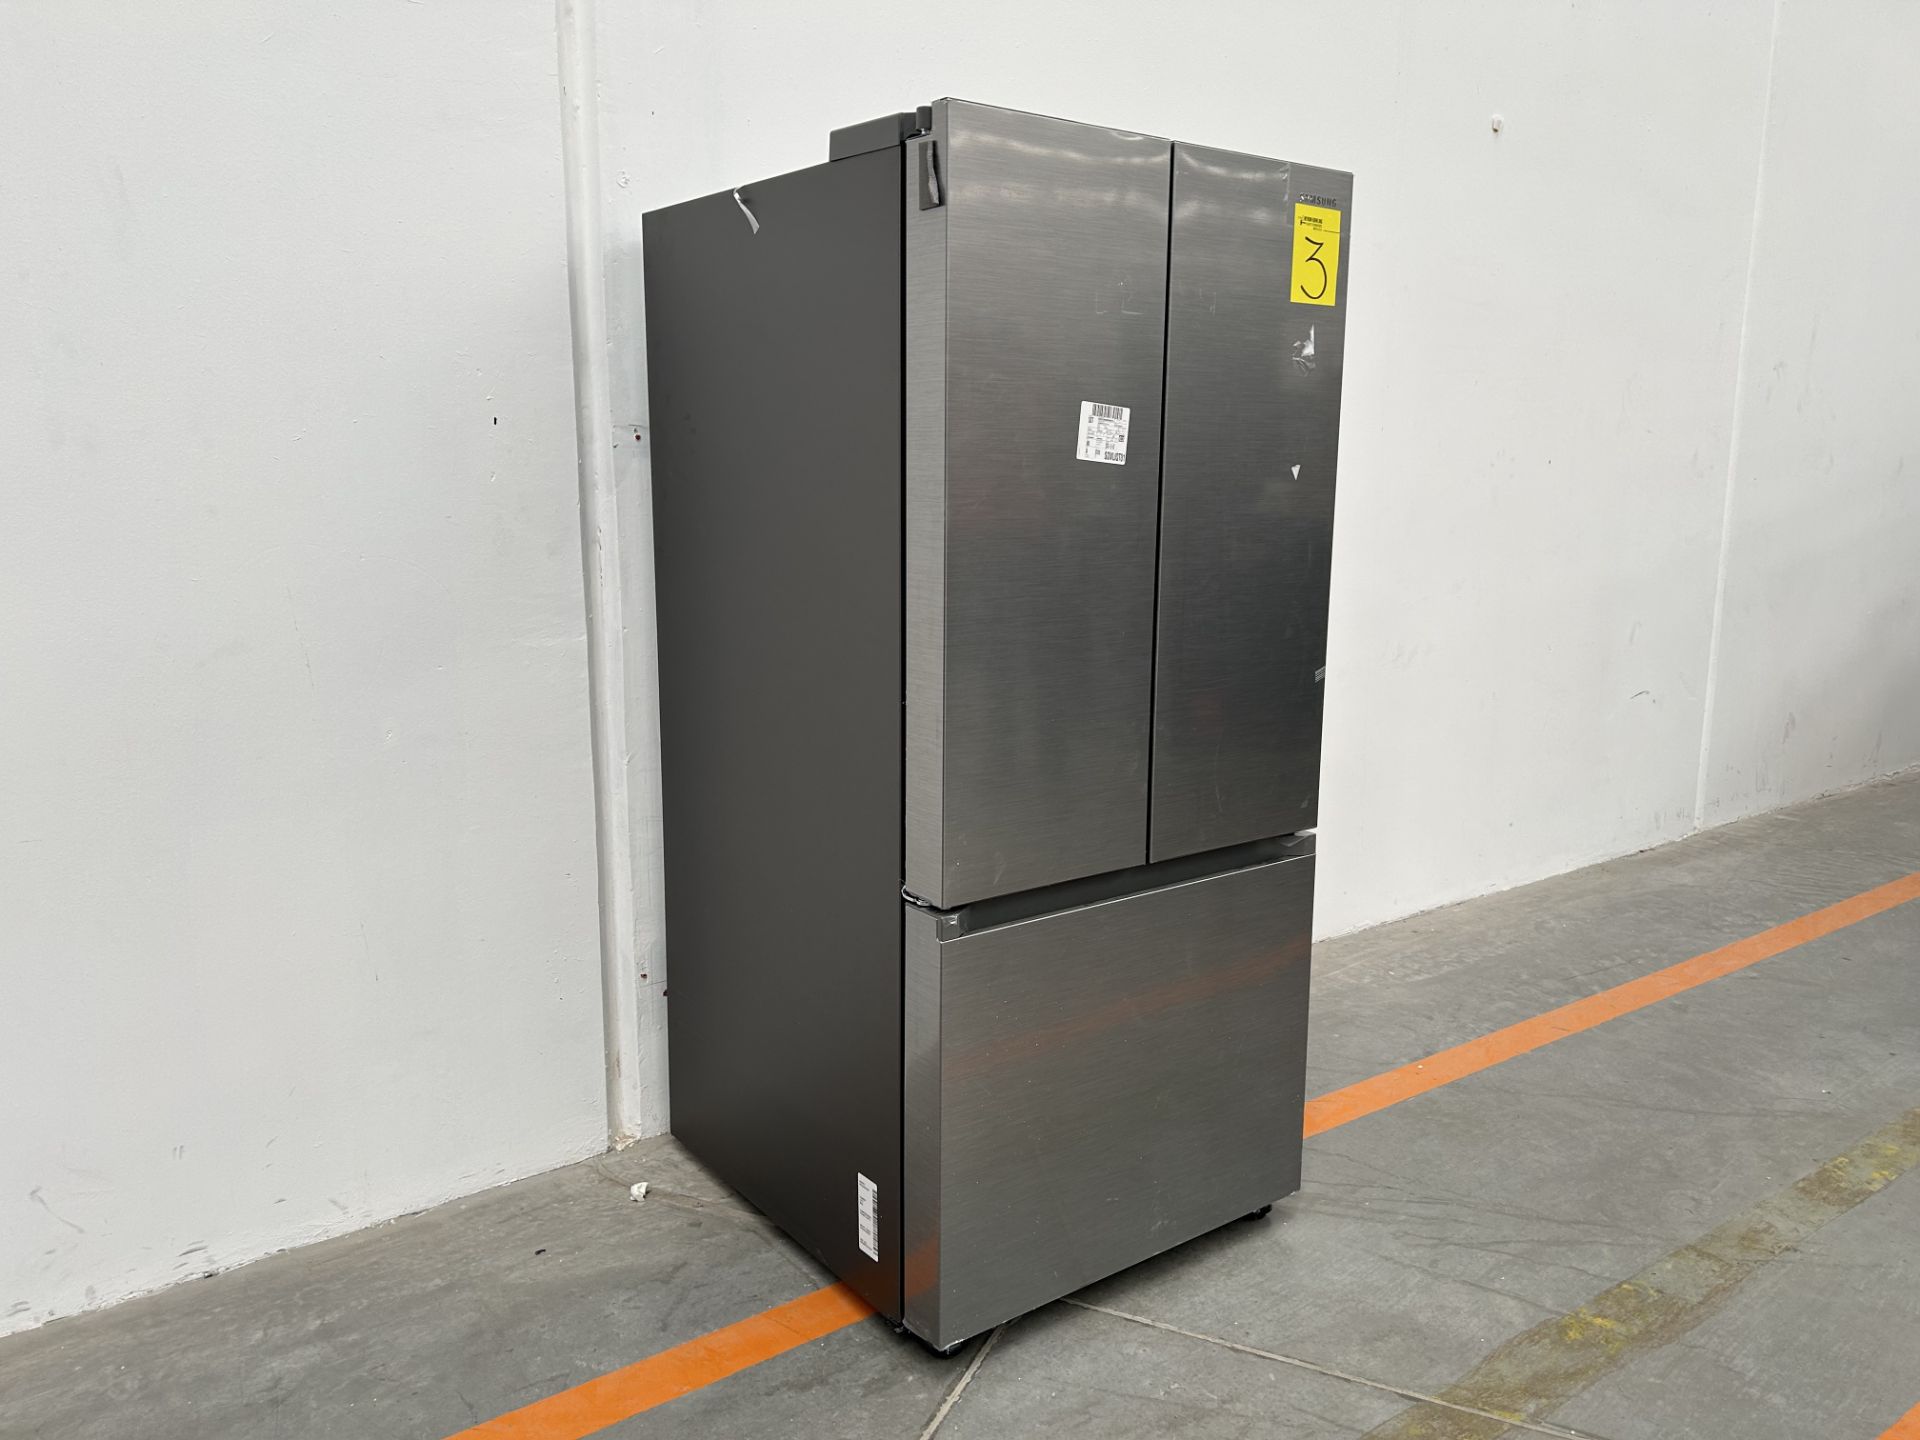 (NUEVO) Refrigerador Marca SAMSUNG, Modelo RF22A410S9, Serie 0791W, Color GRIS - Image 3 of 4